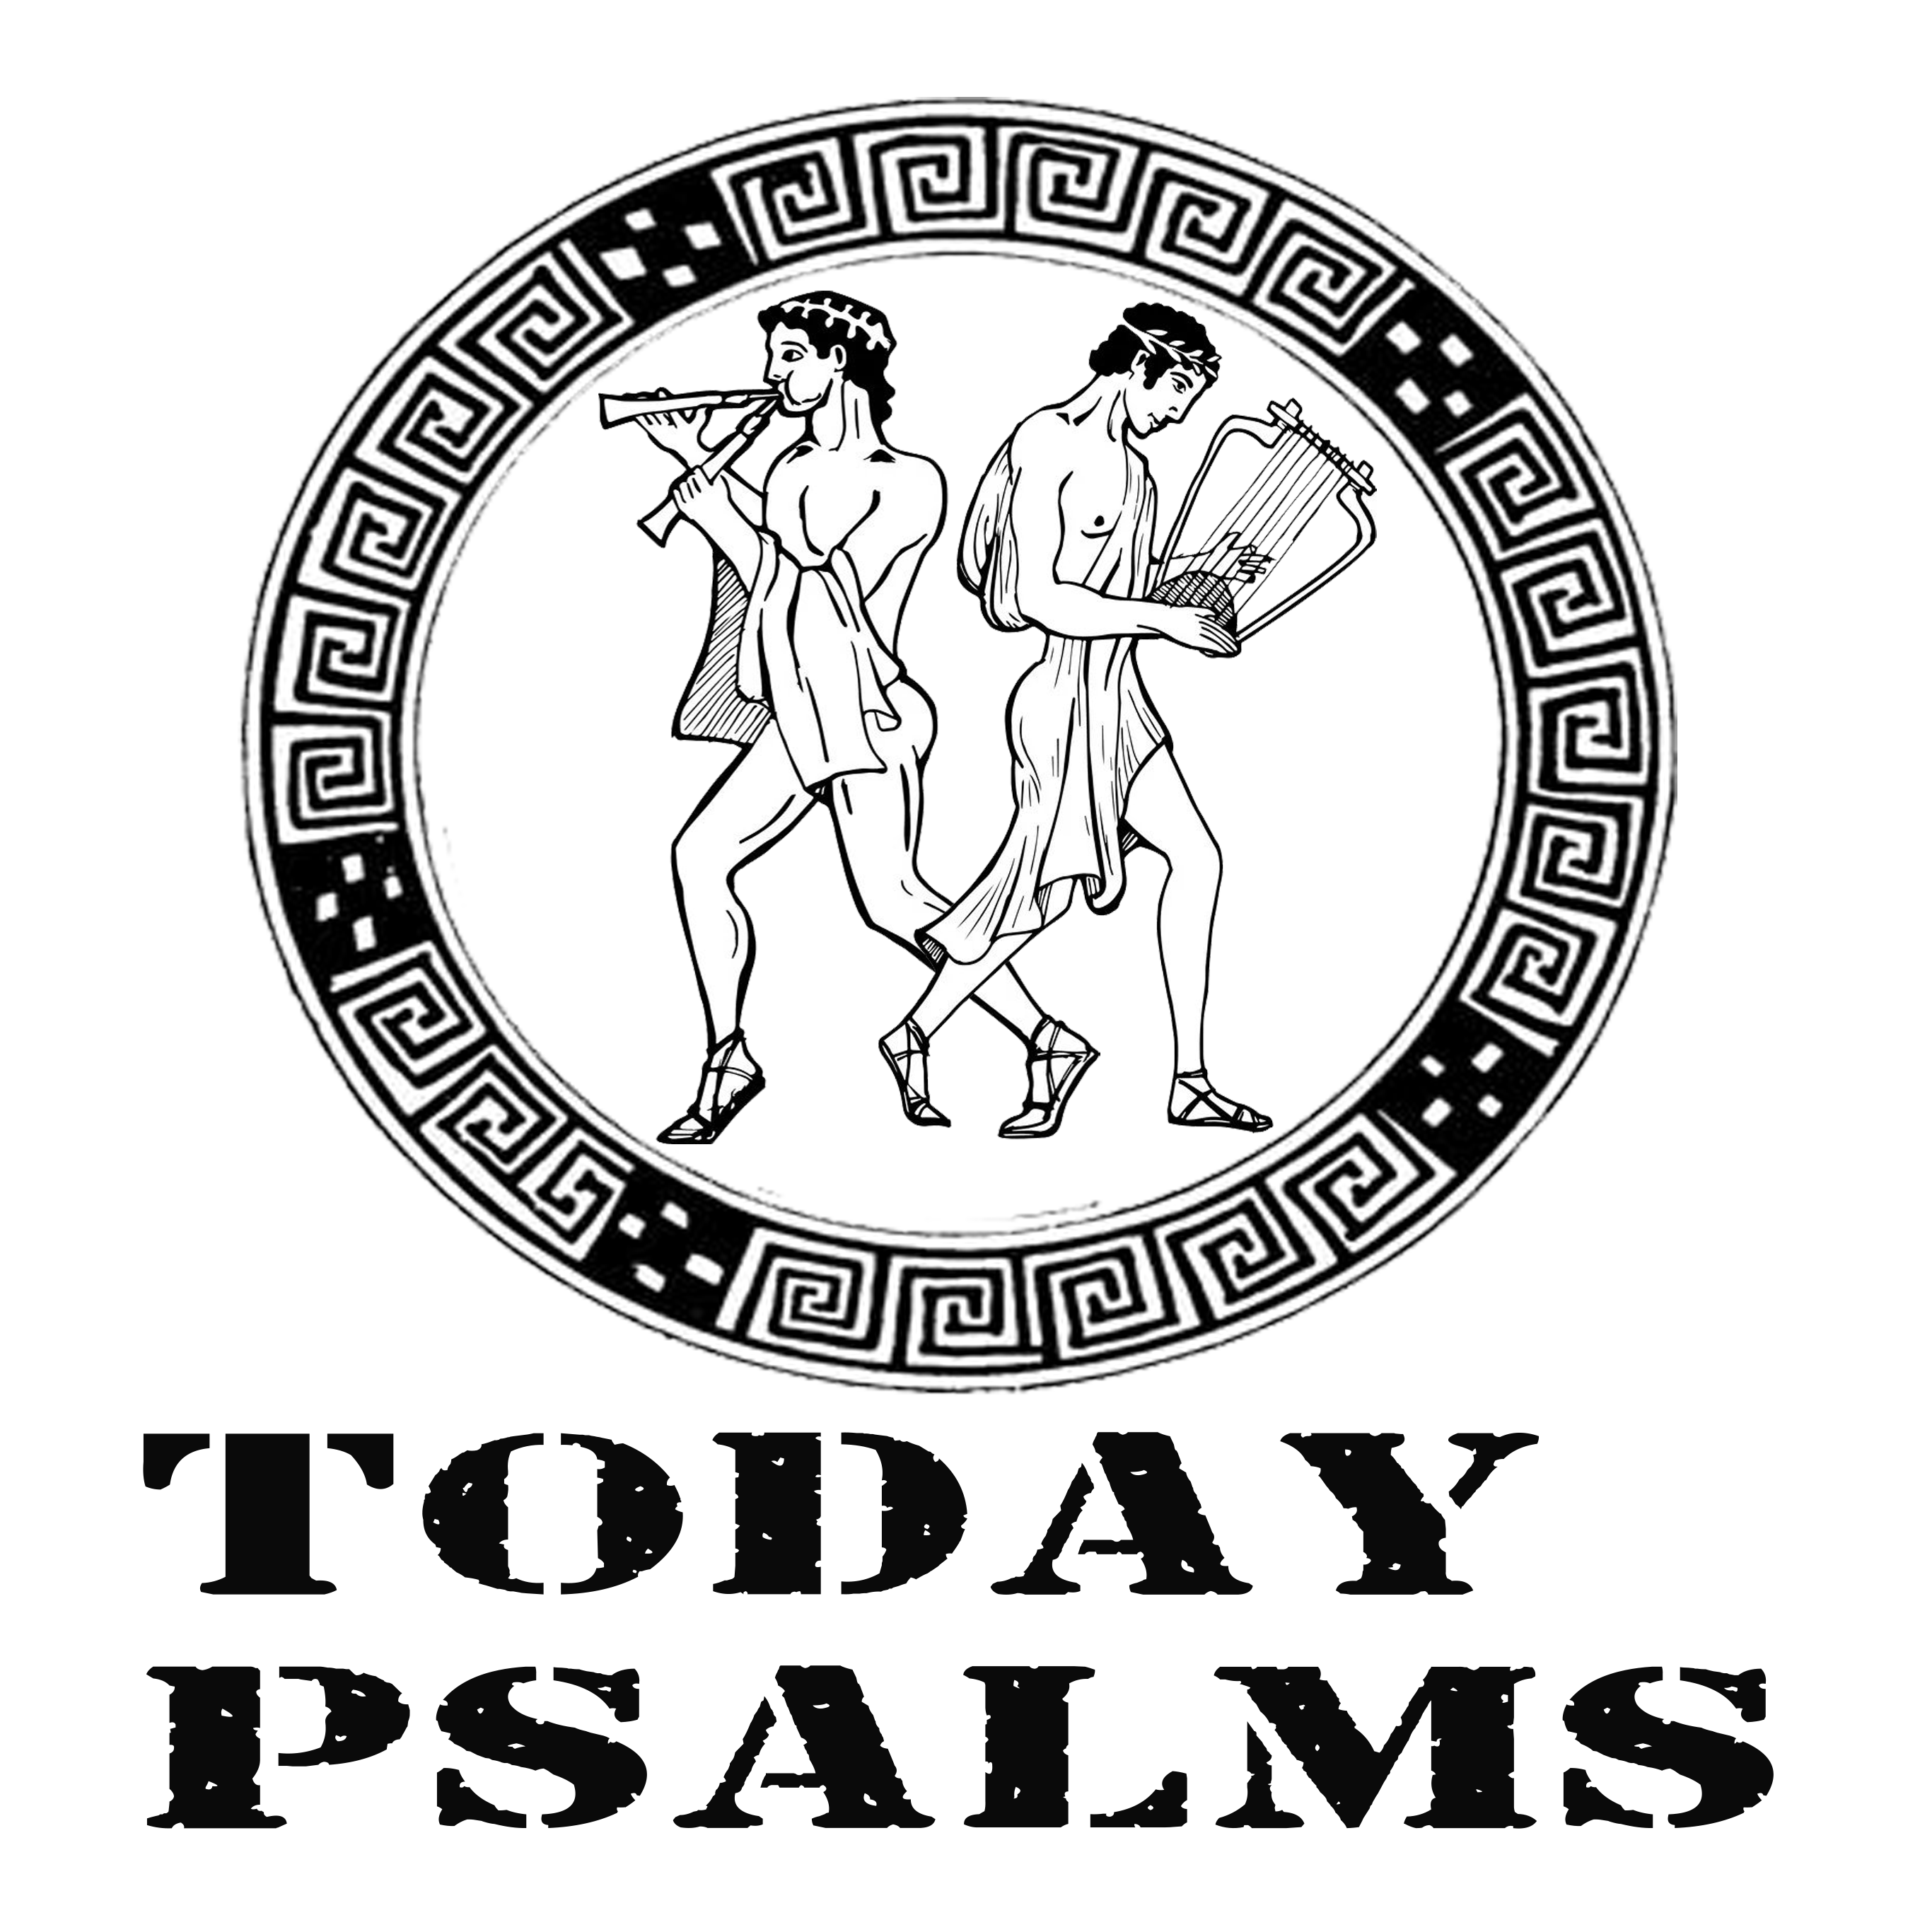 Today psalms